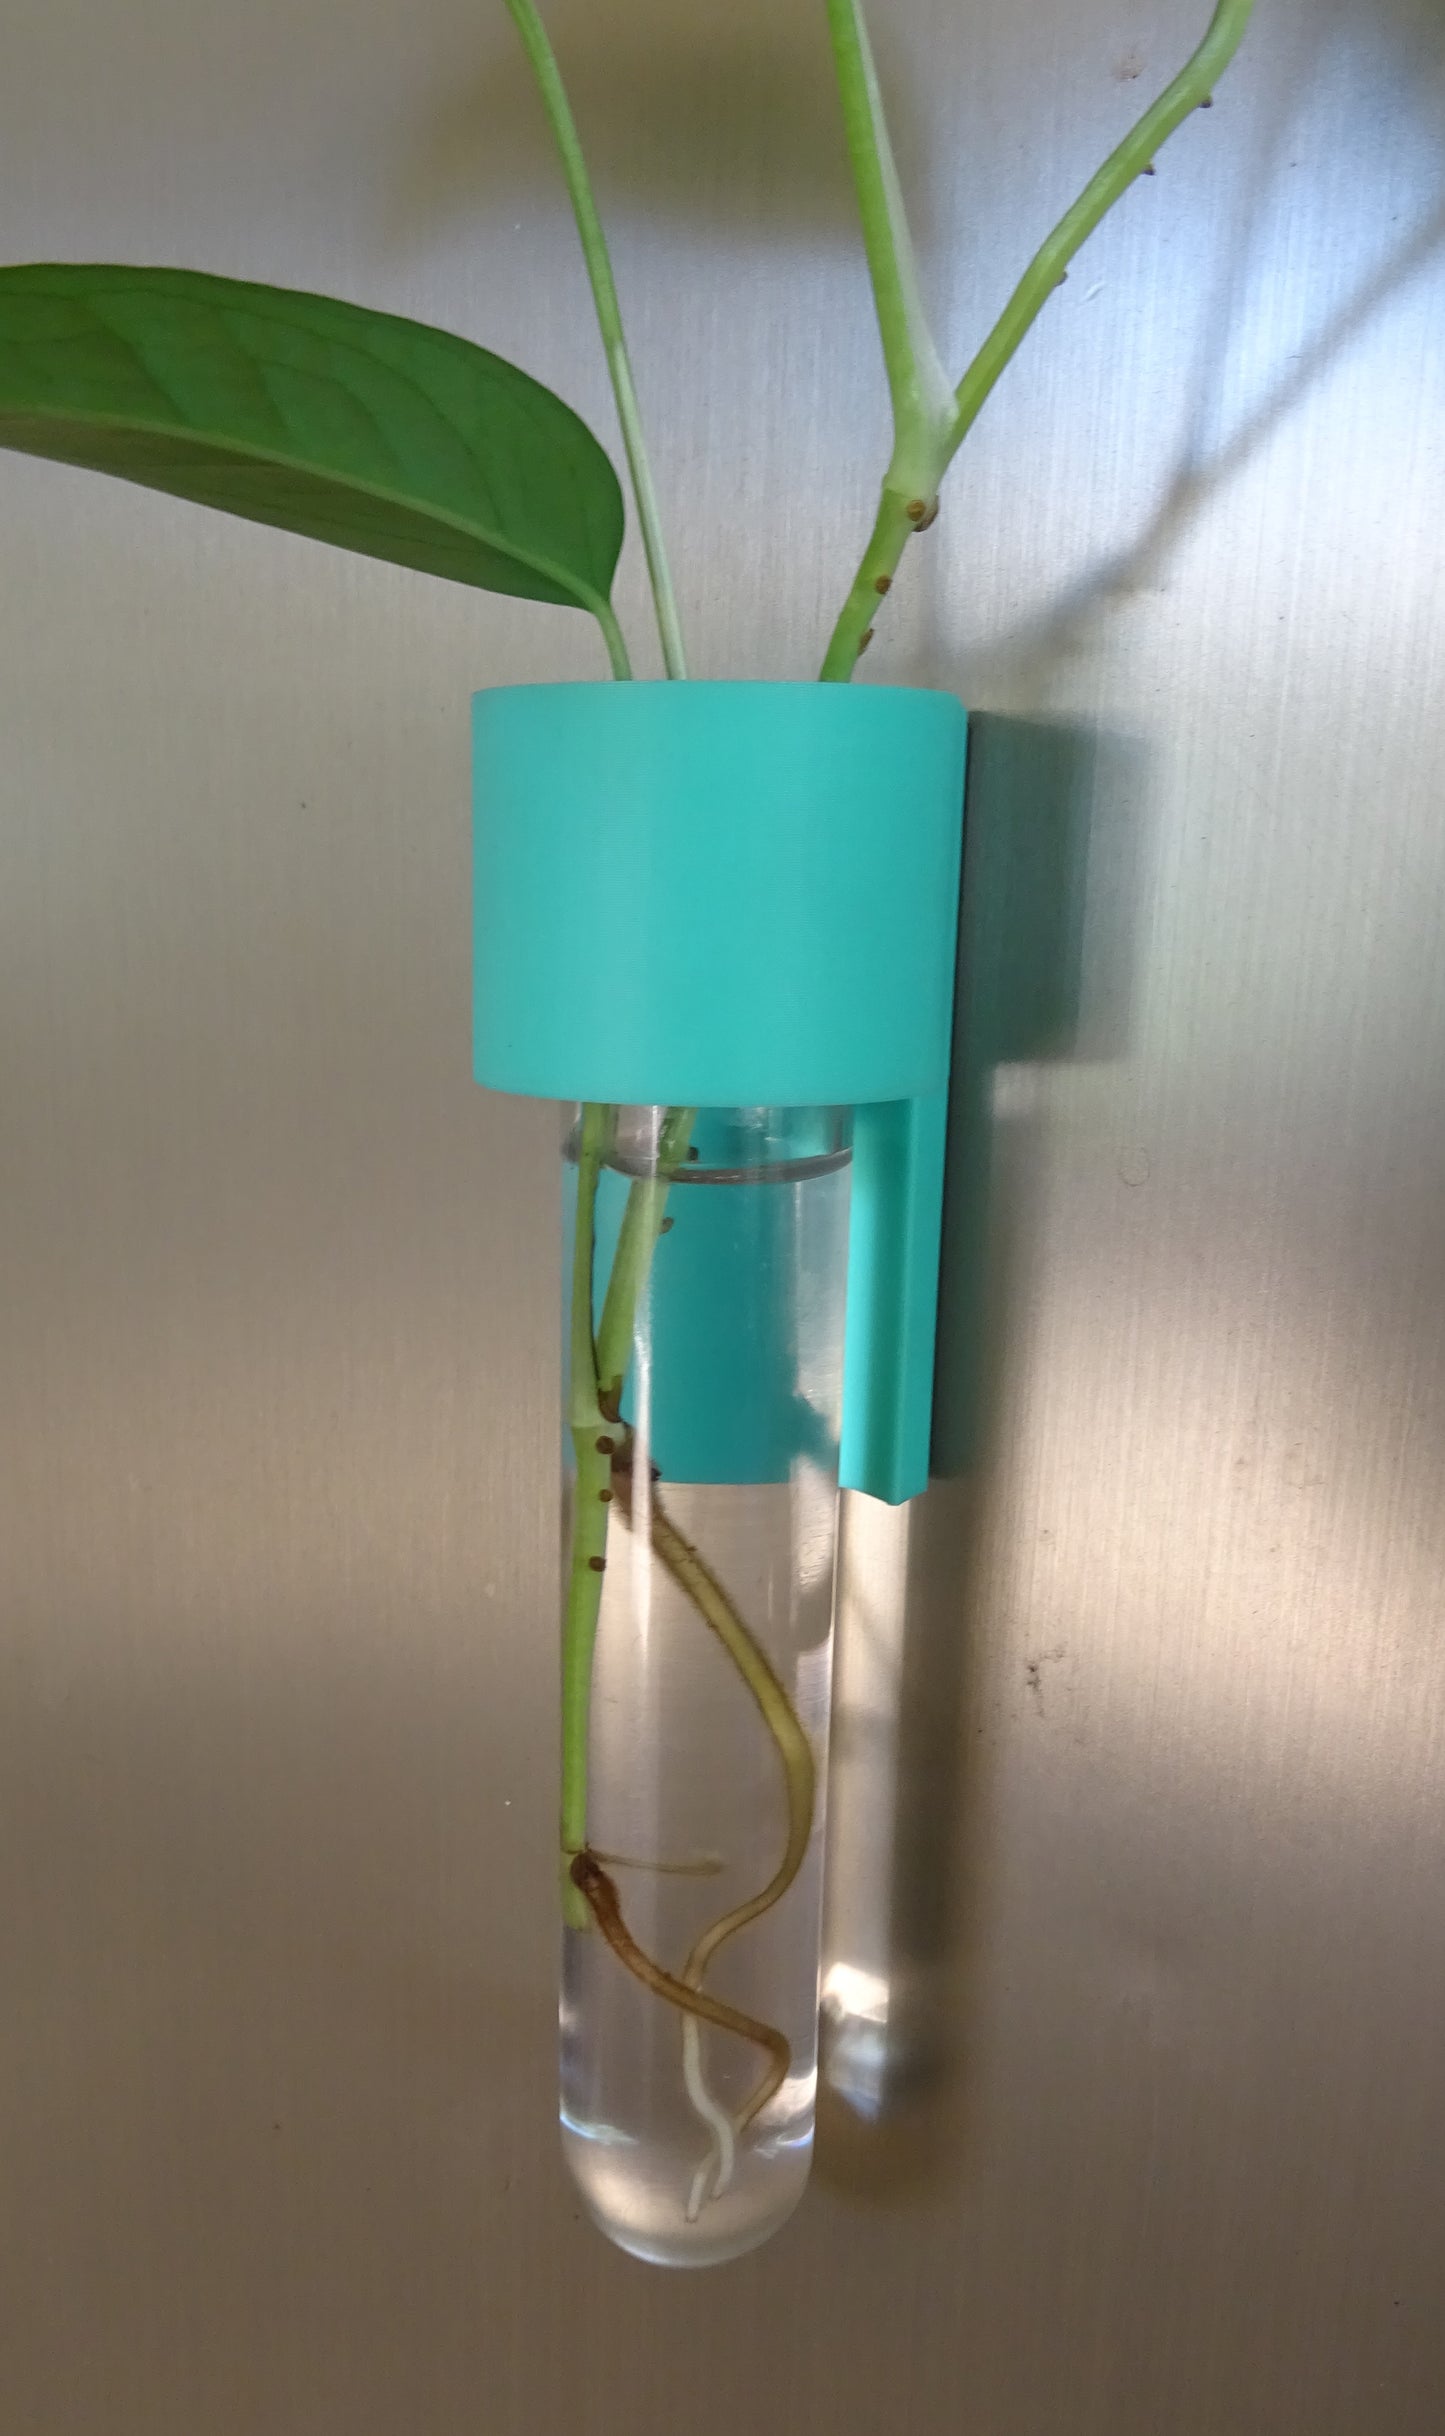 3D Printed Magnetic Fridge Hydroponic Planter/Vase